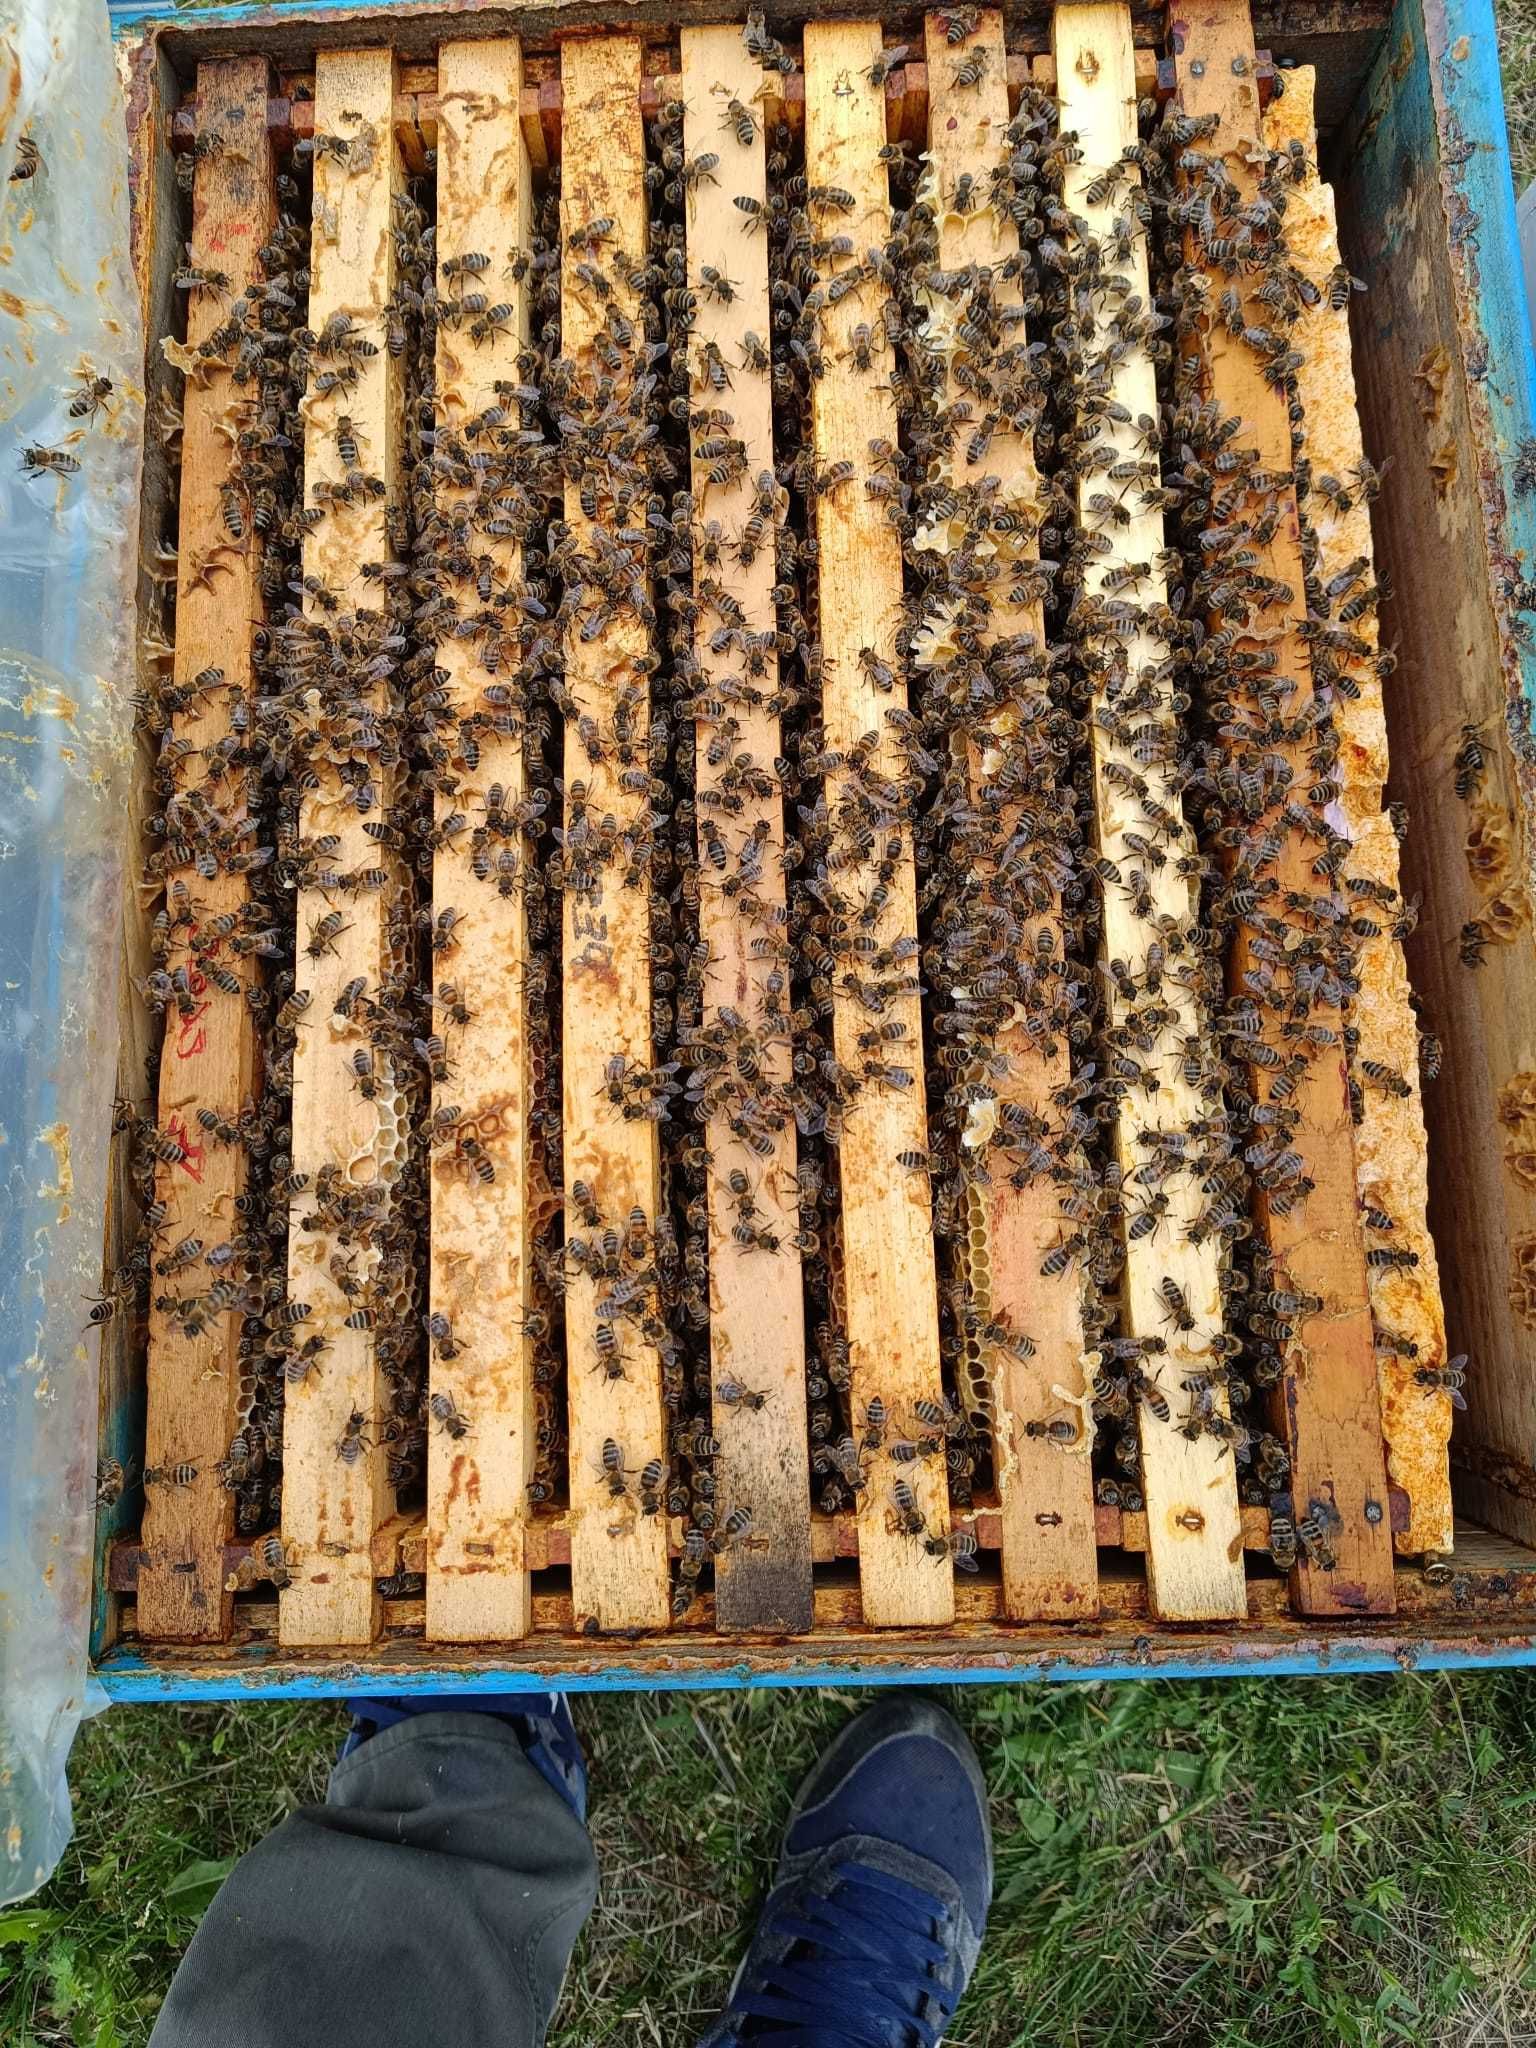 Vând 35 stupi cu albine la alegere pe 9-10 rame+magazii complete